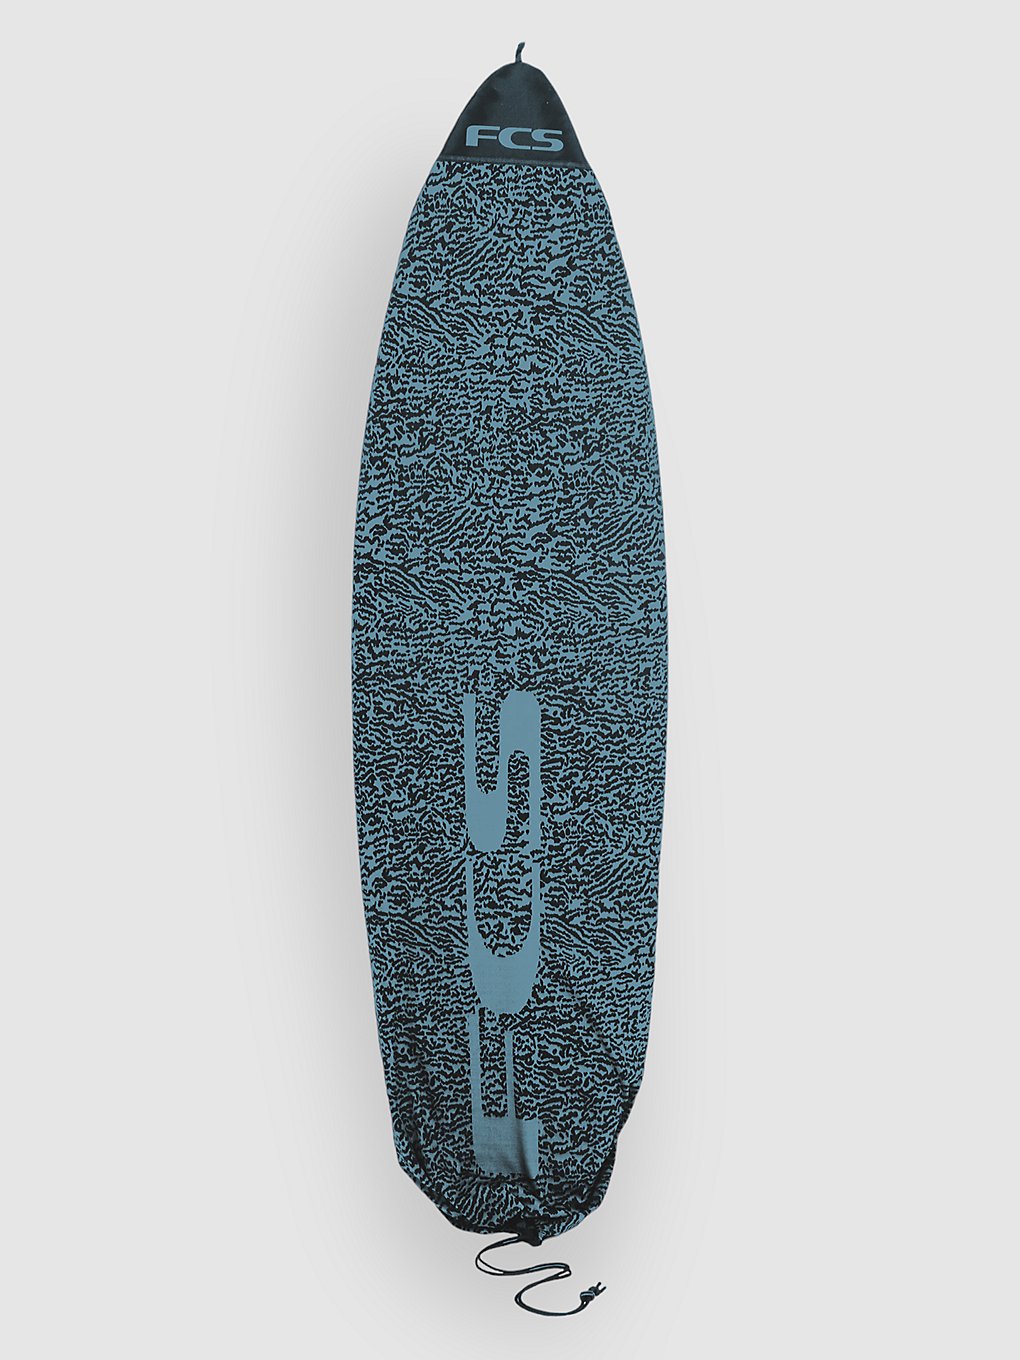 FCS Stretch Fun Board 6'7 Surfboard-Tasche tranquil blue kaufen